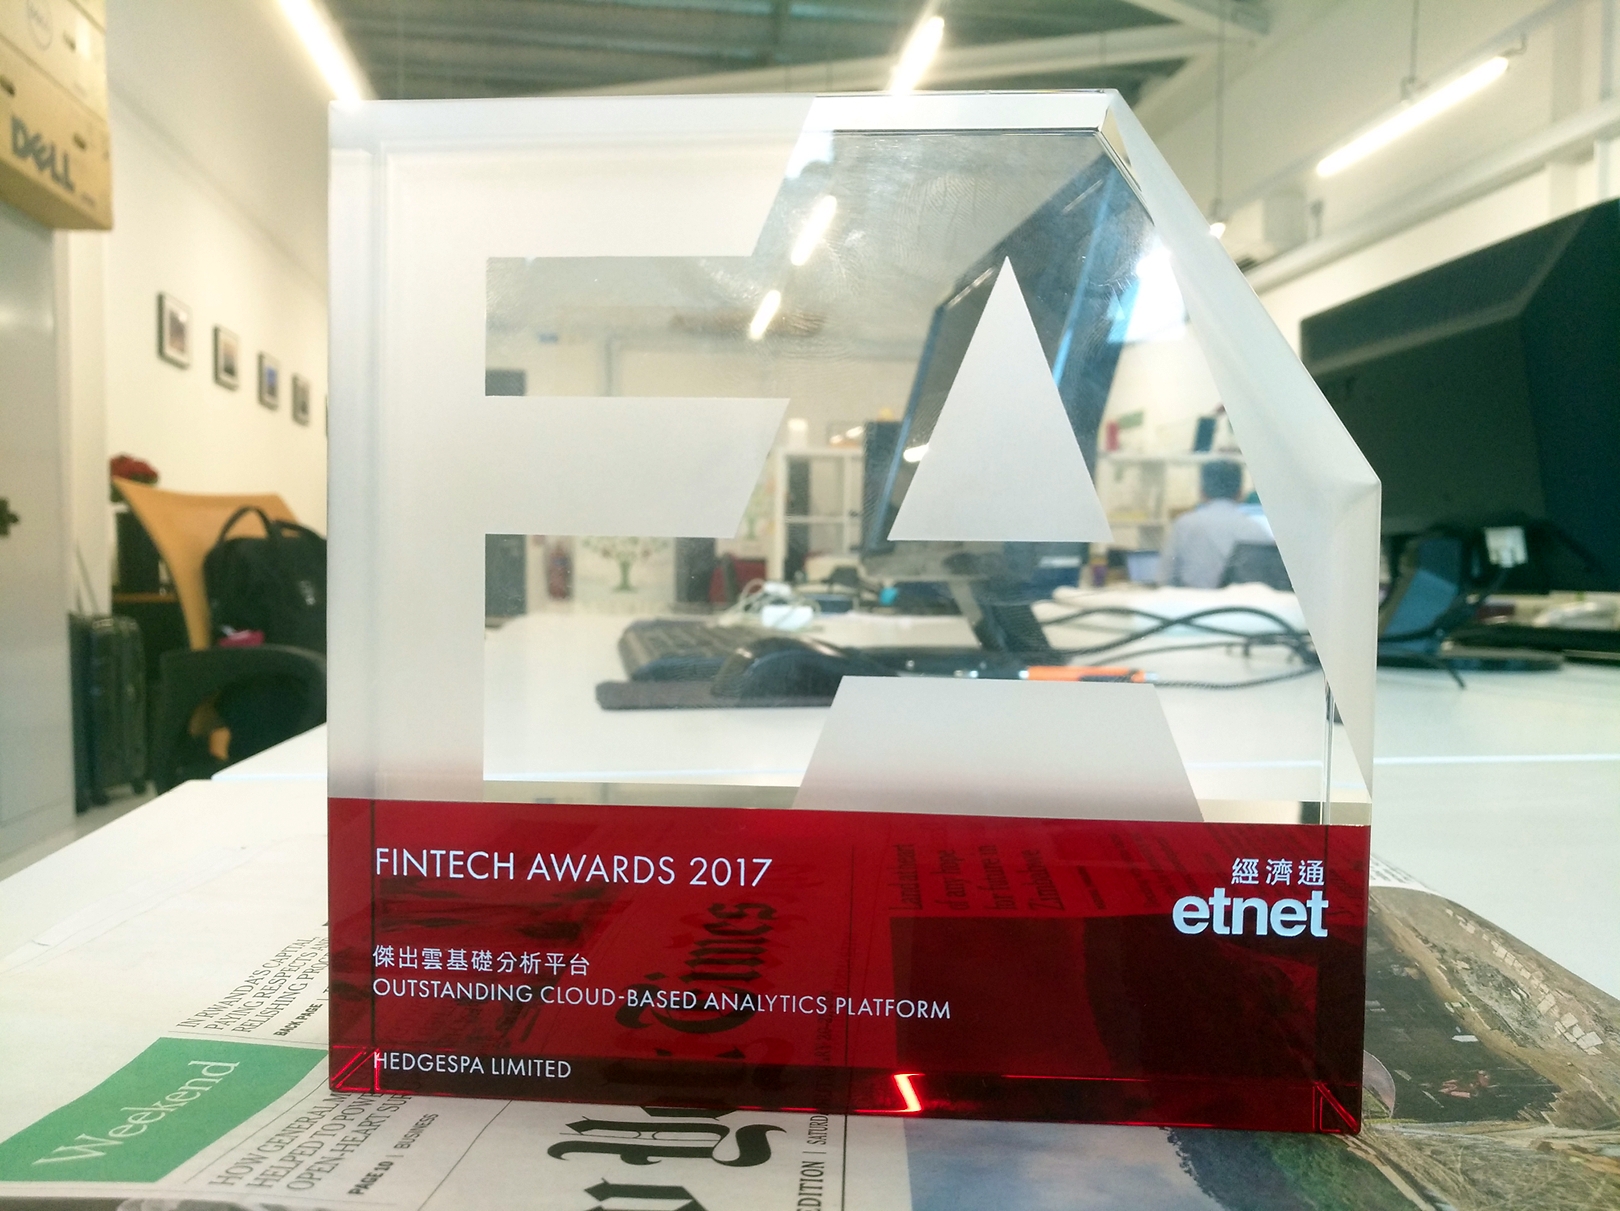 2017 ETNet FinTech Awards: “Outstanding Cloud-based Analytics Platform”